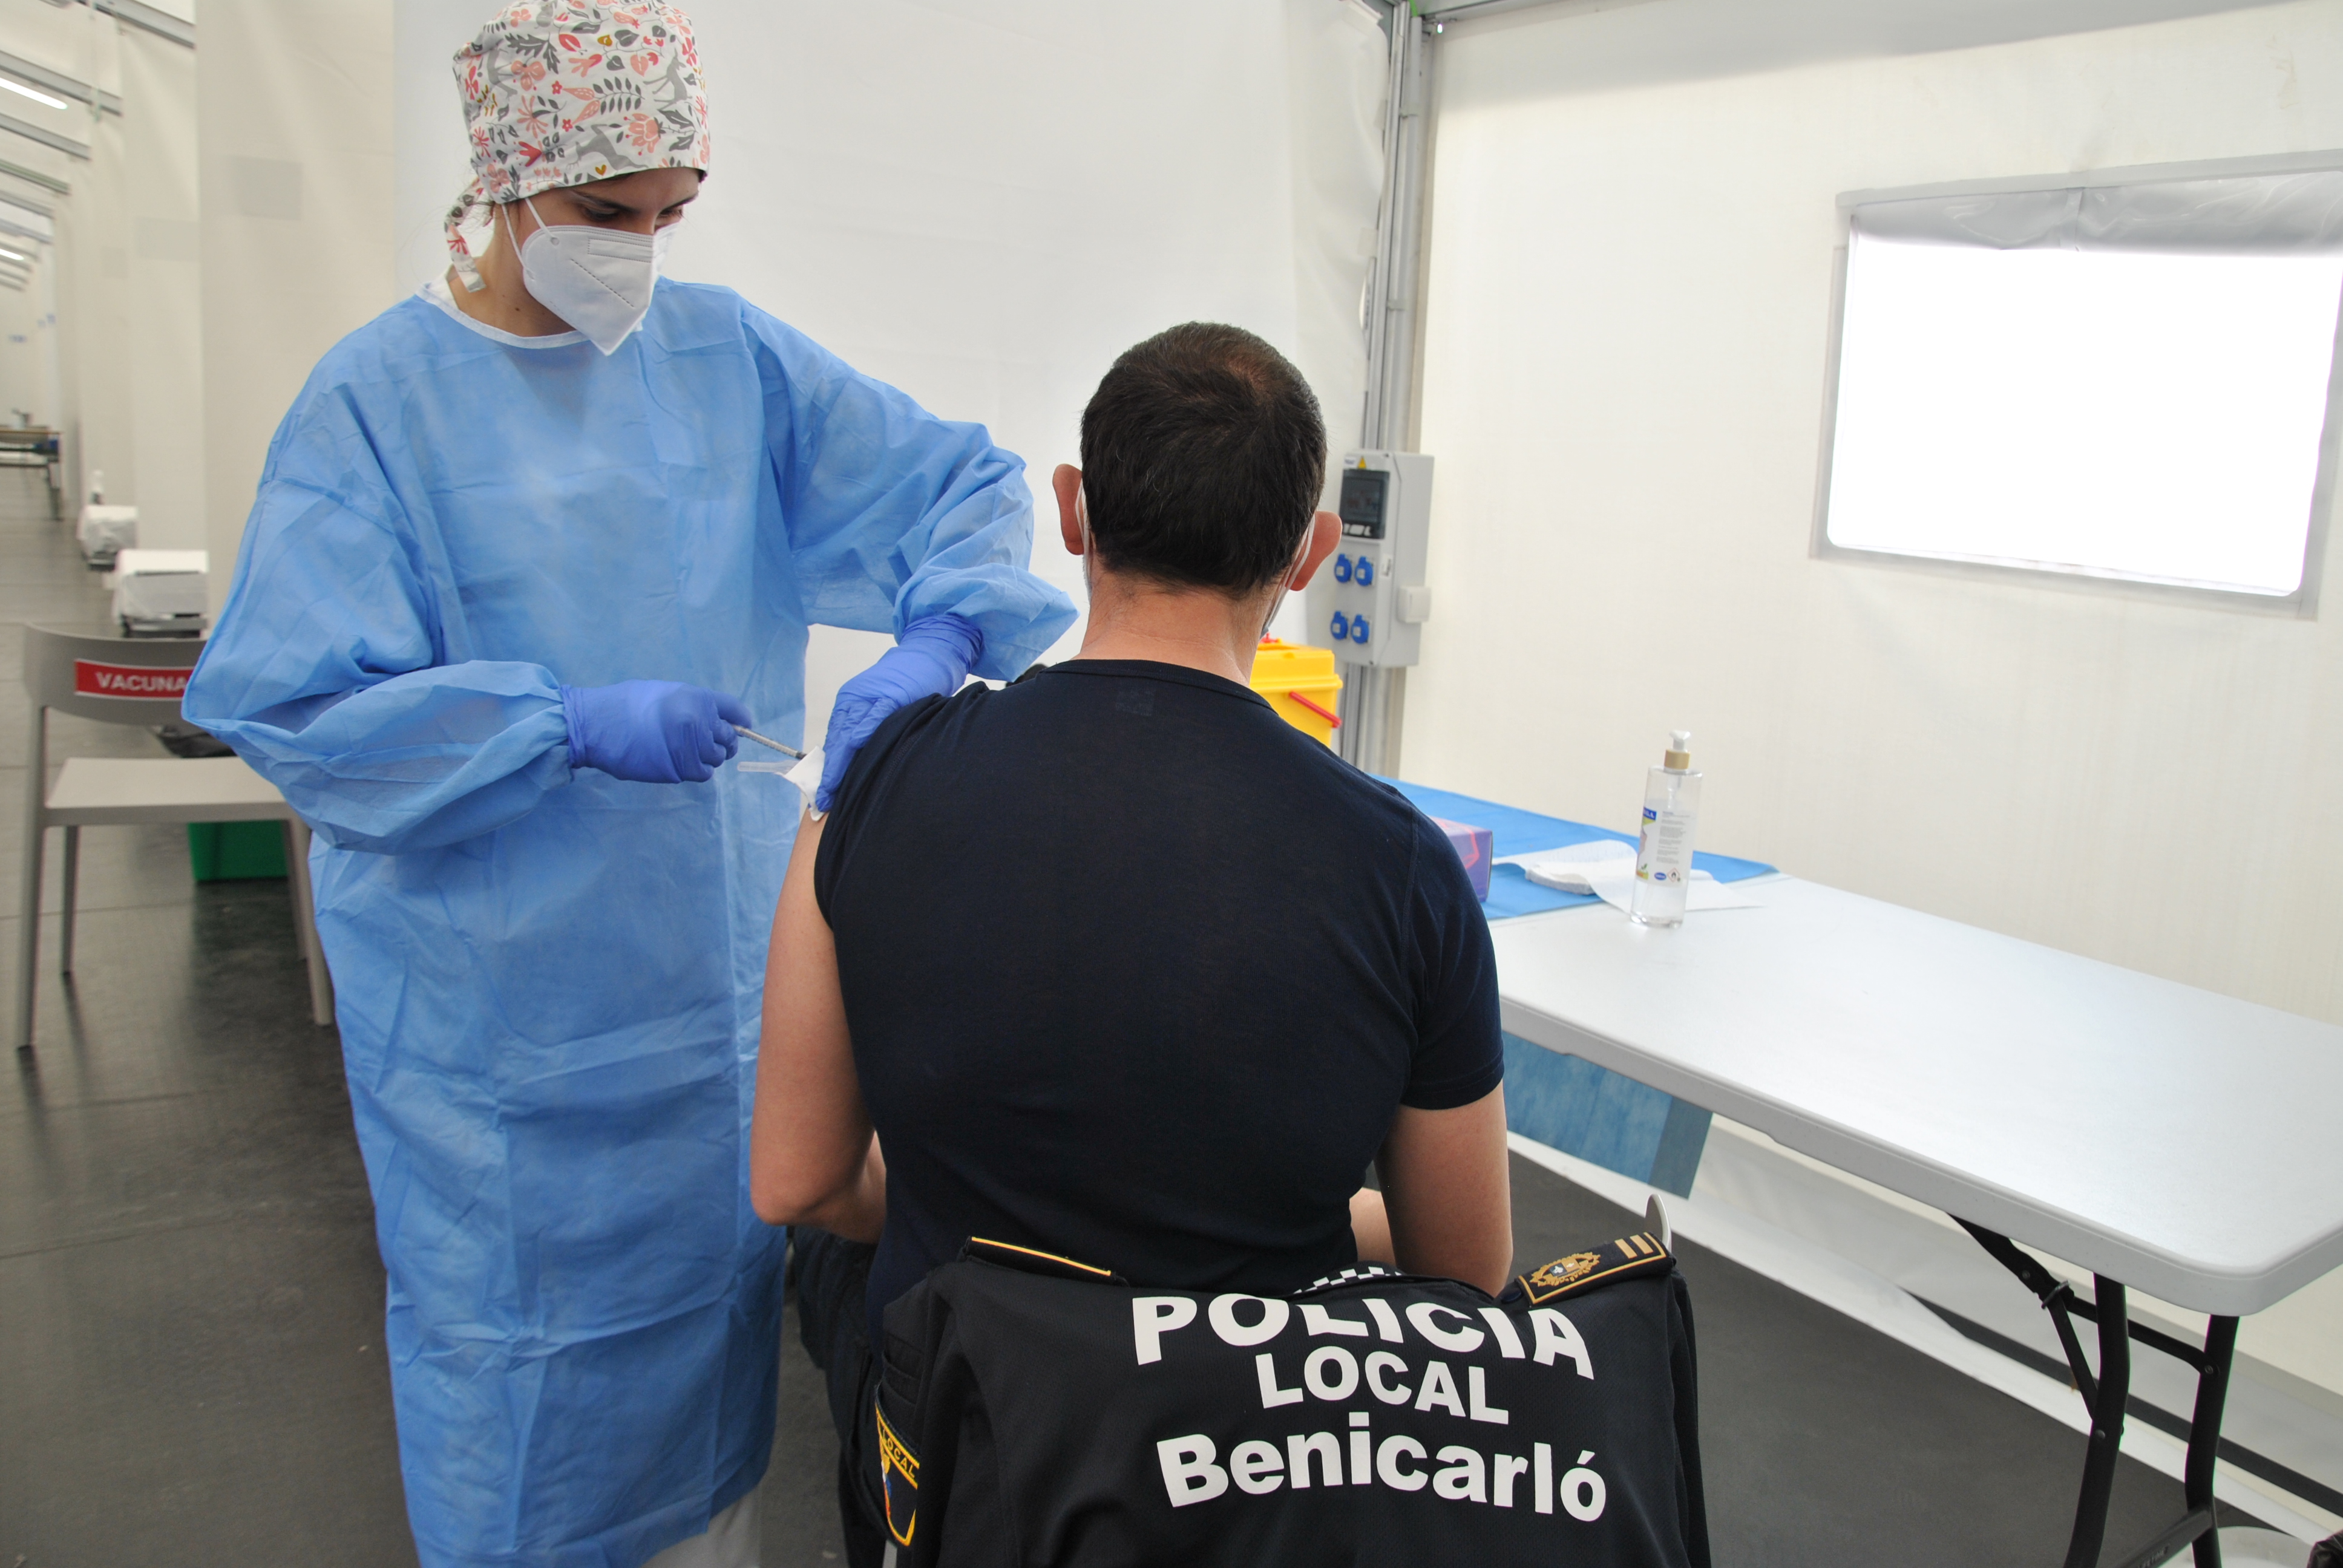 El cos de la Policia Local de Benicarló ja s'ha vacunat contra la Covid-19